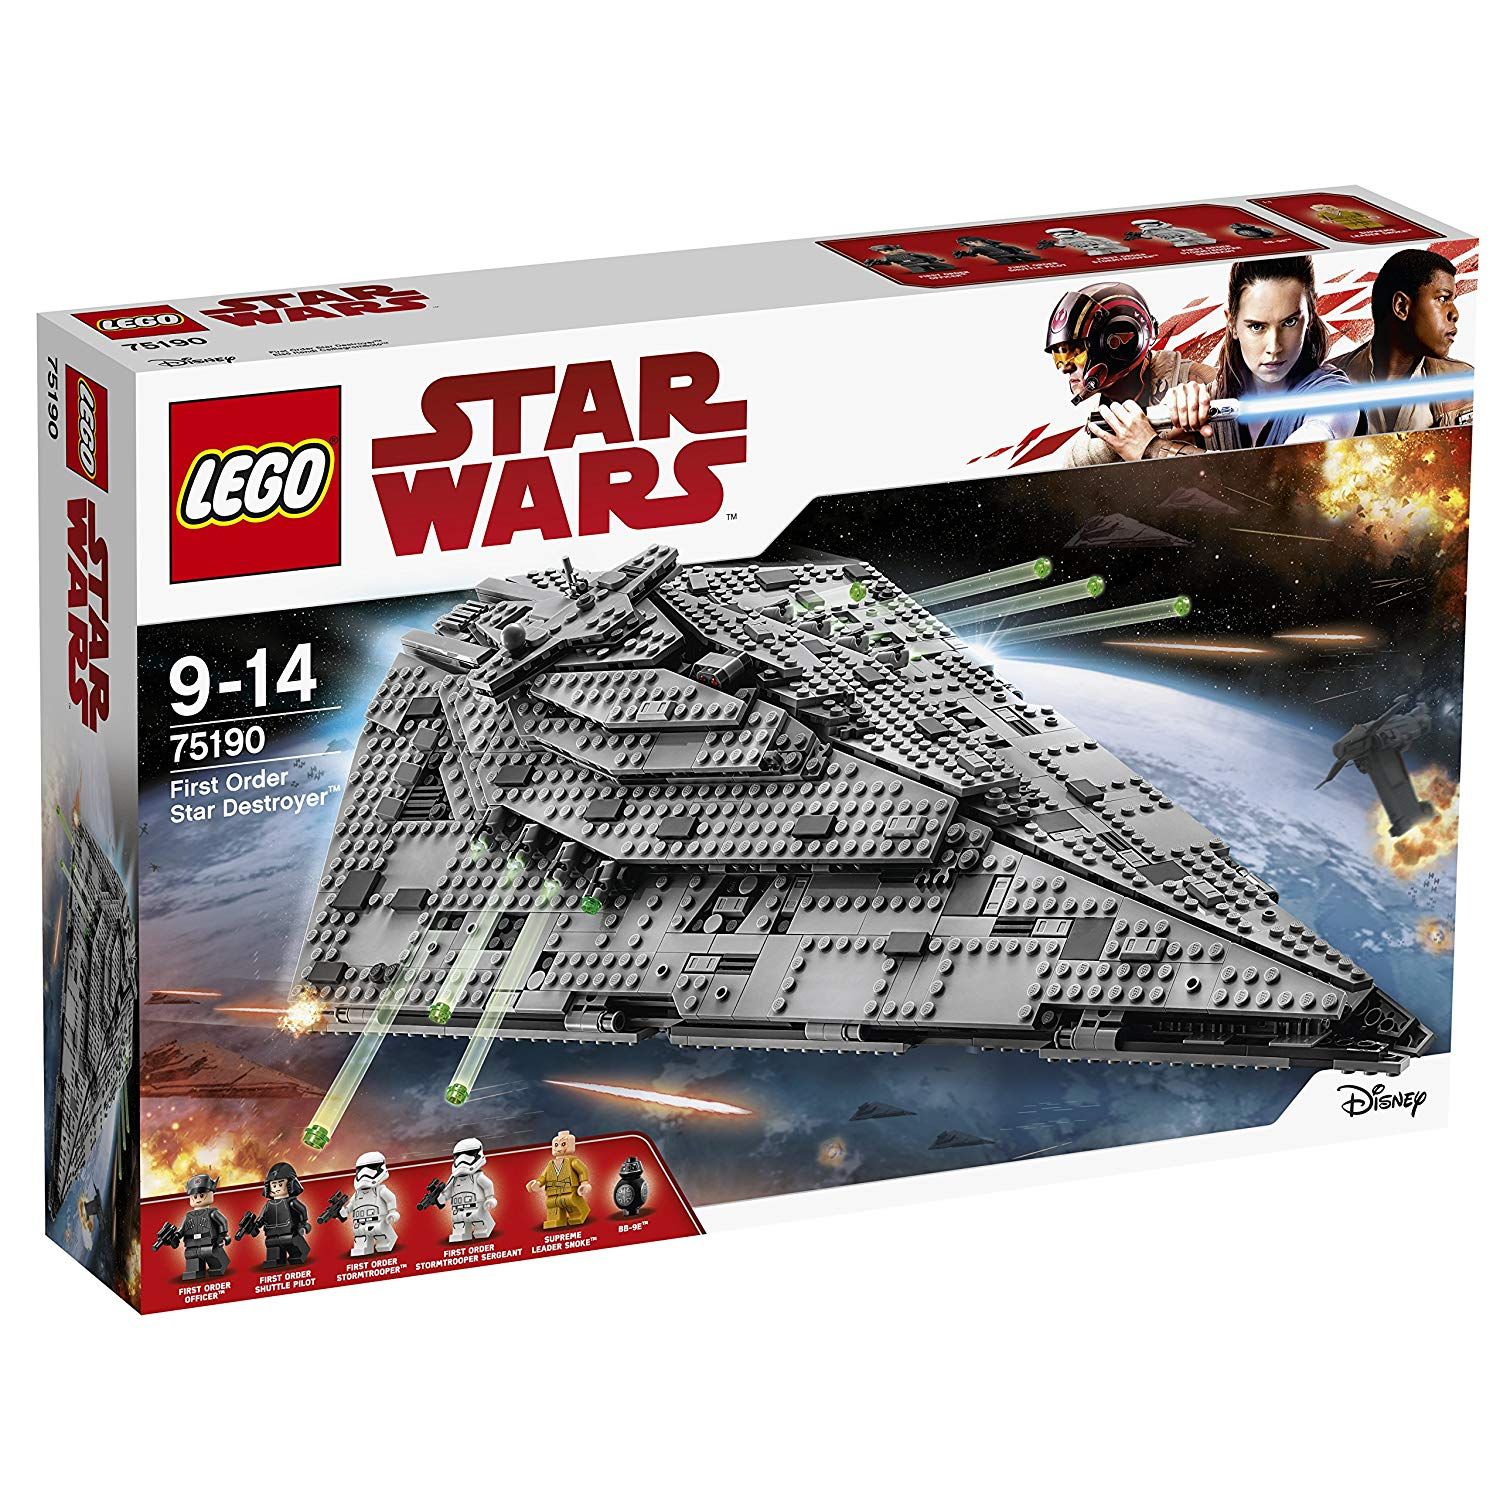 [ORDER ITEMS] LEGO 75190 Star Wars Episode VIII First Order Star Destroyer